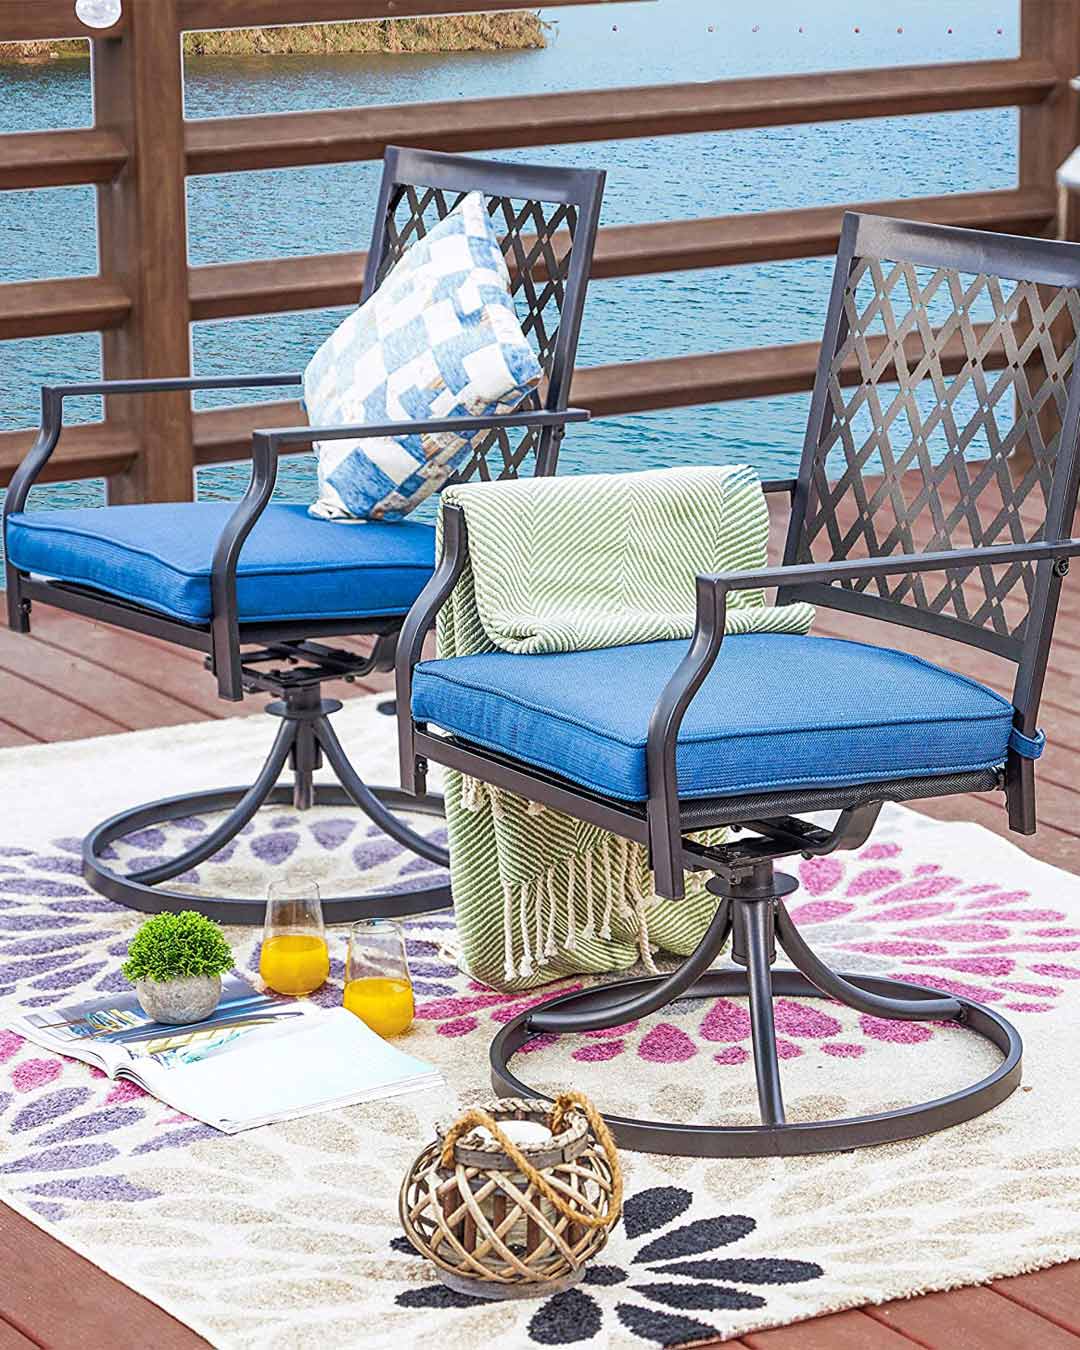 wedding registry ideas patio furniture set stools